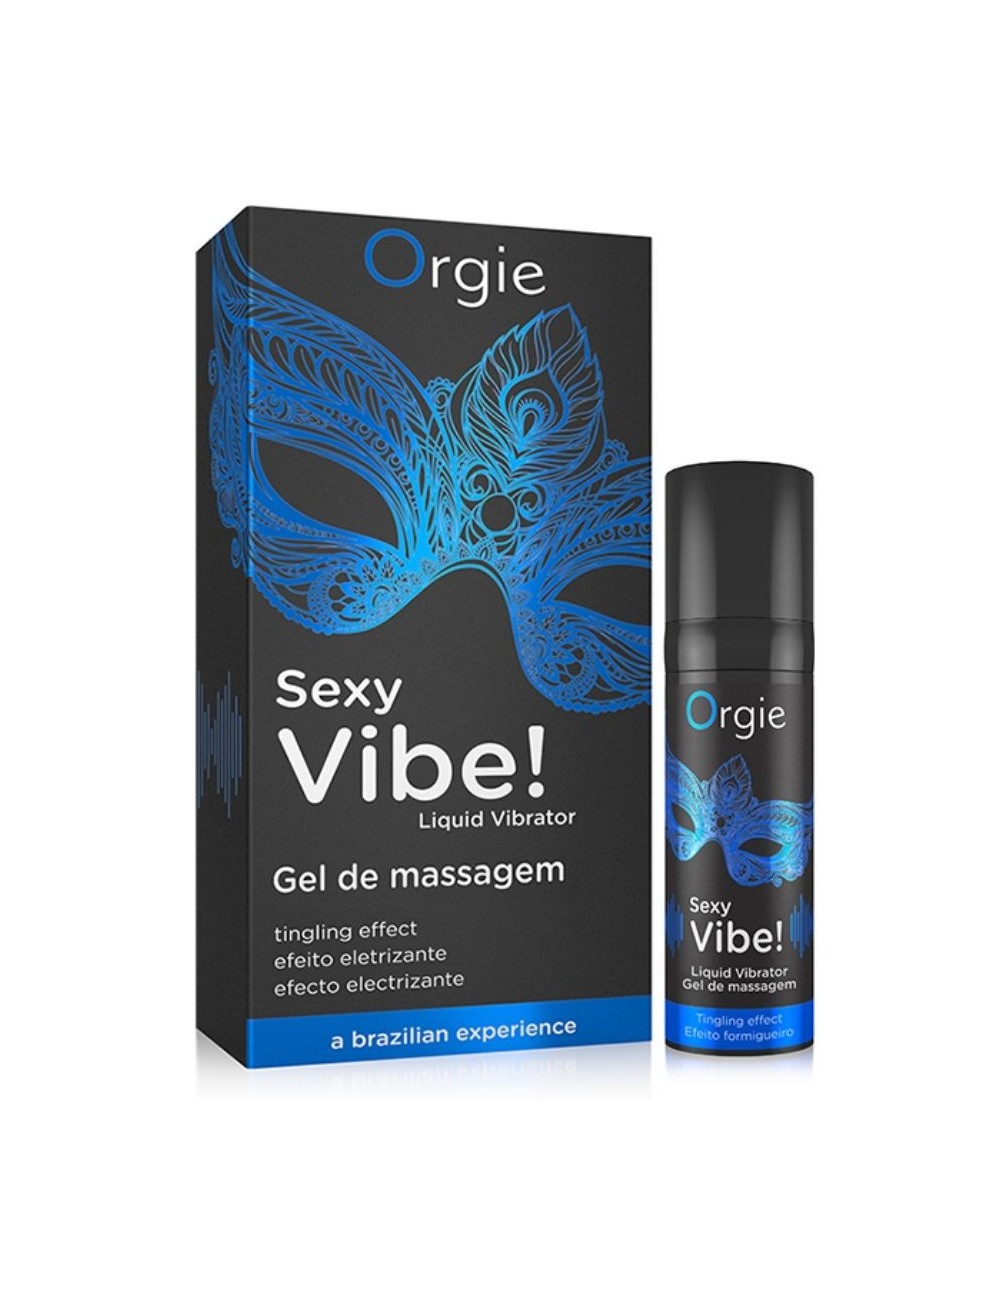 Orgie sexy vibe! vibrateur liquide 15 ml - Lubrifiants - Orgie